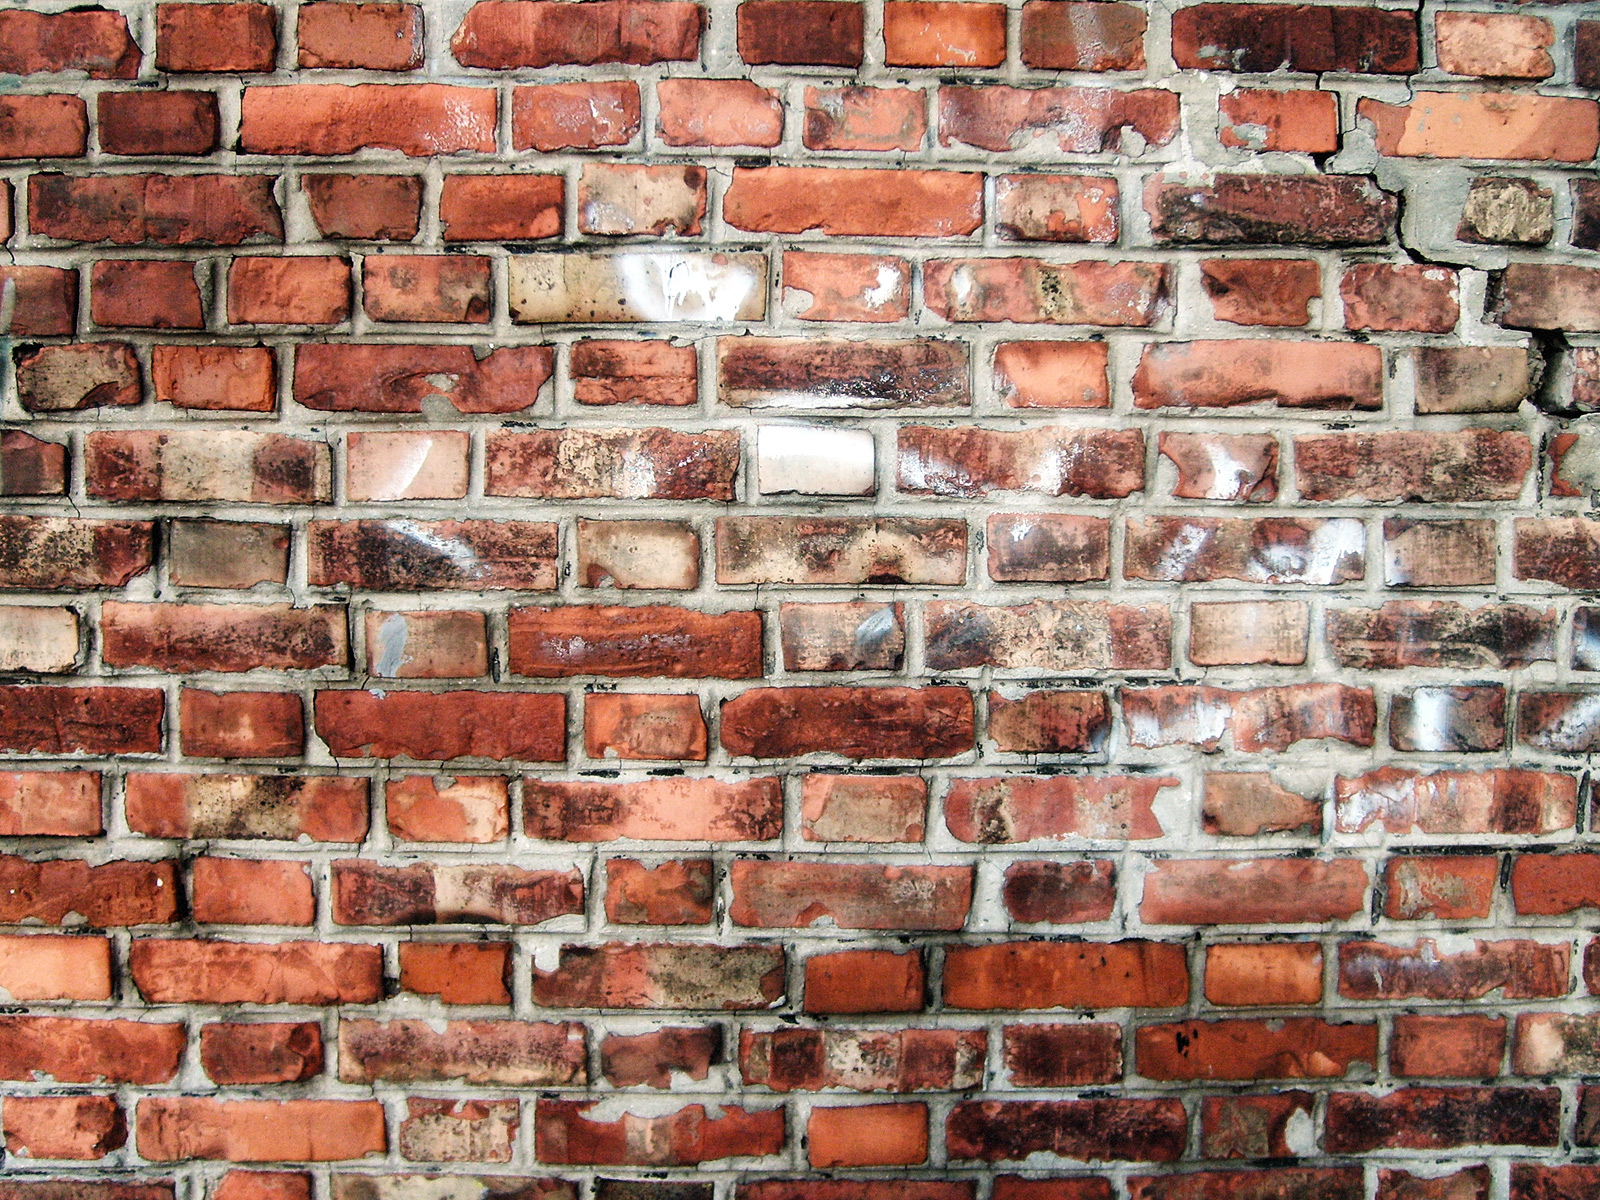 File Brick Wall In Flemish Bond Jpg Wikipedia The Encyclopedia